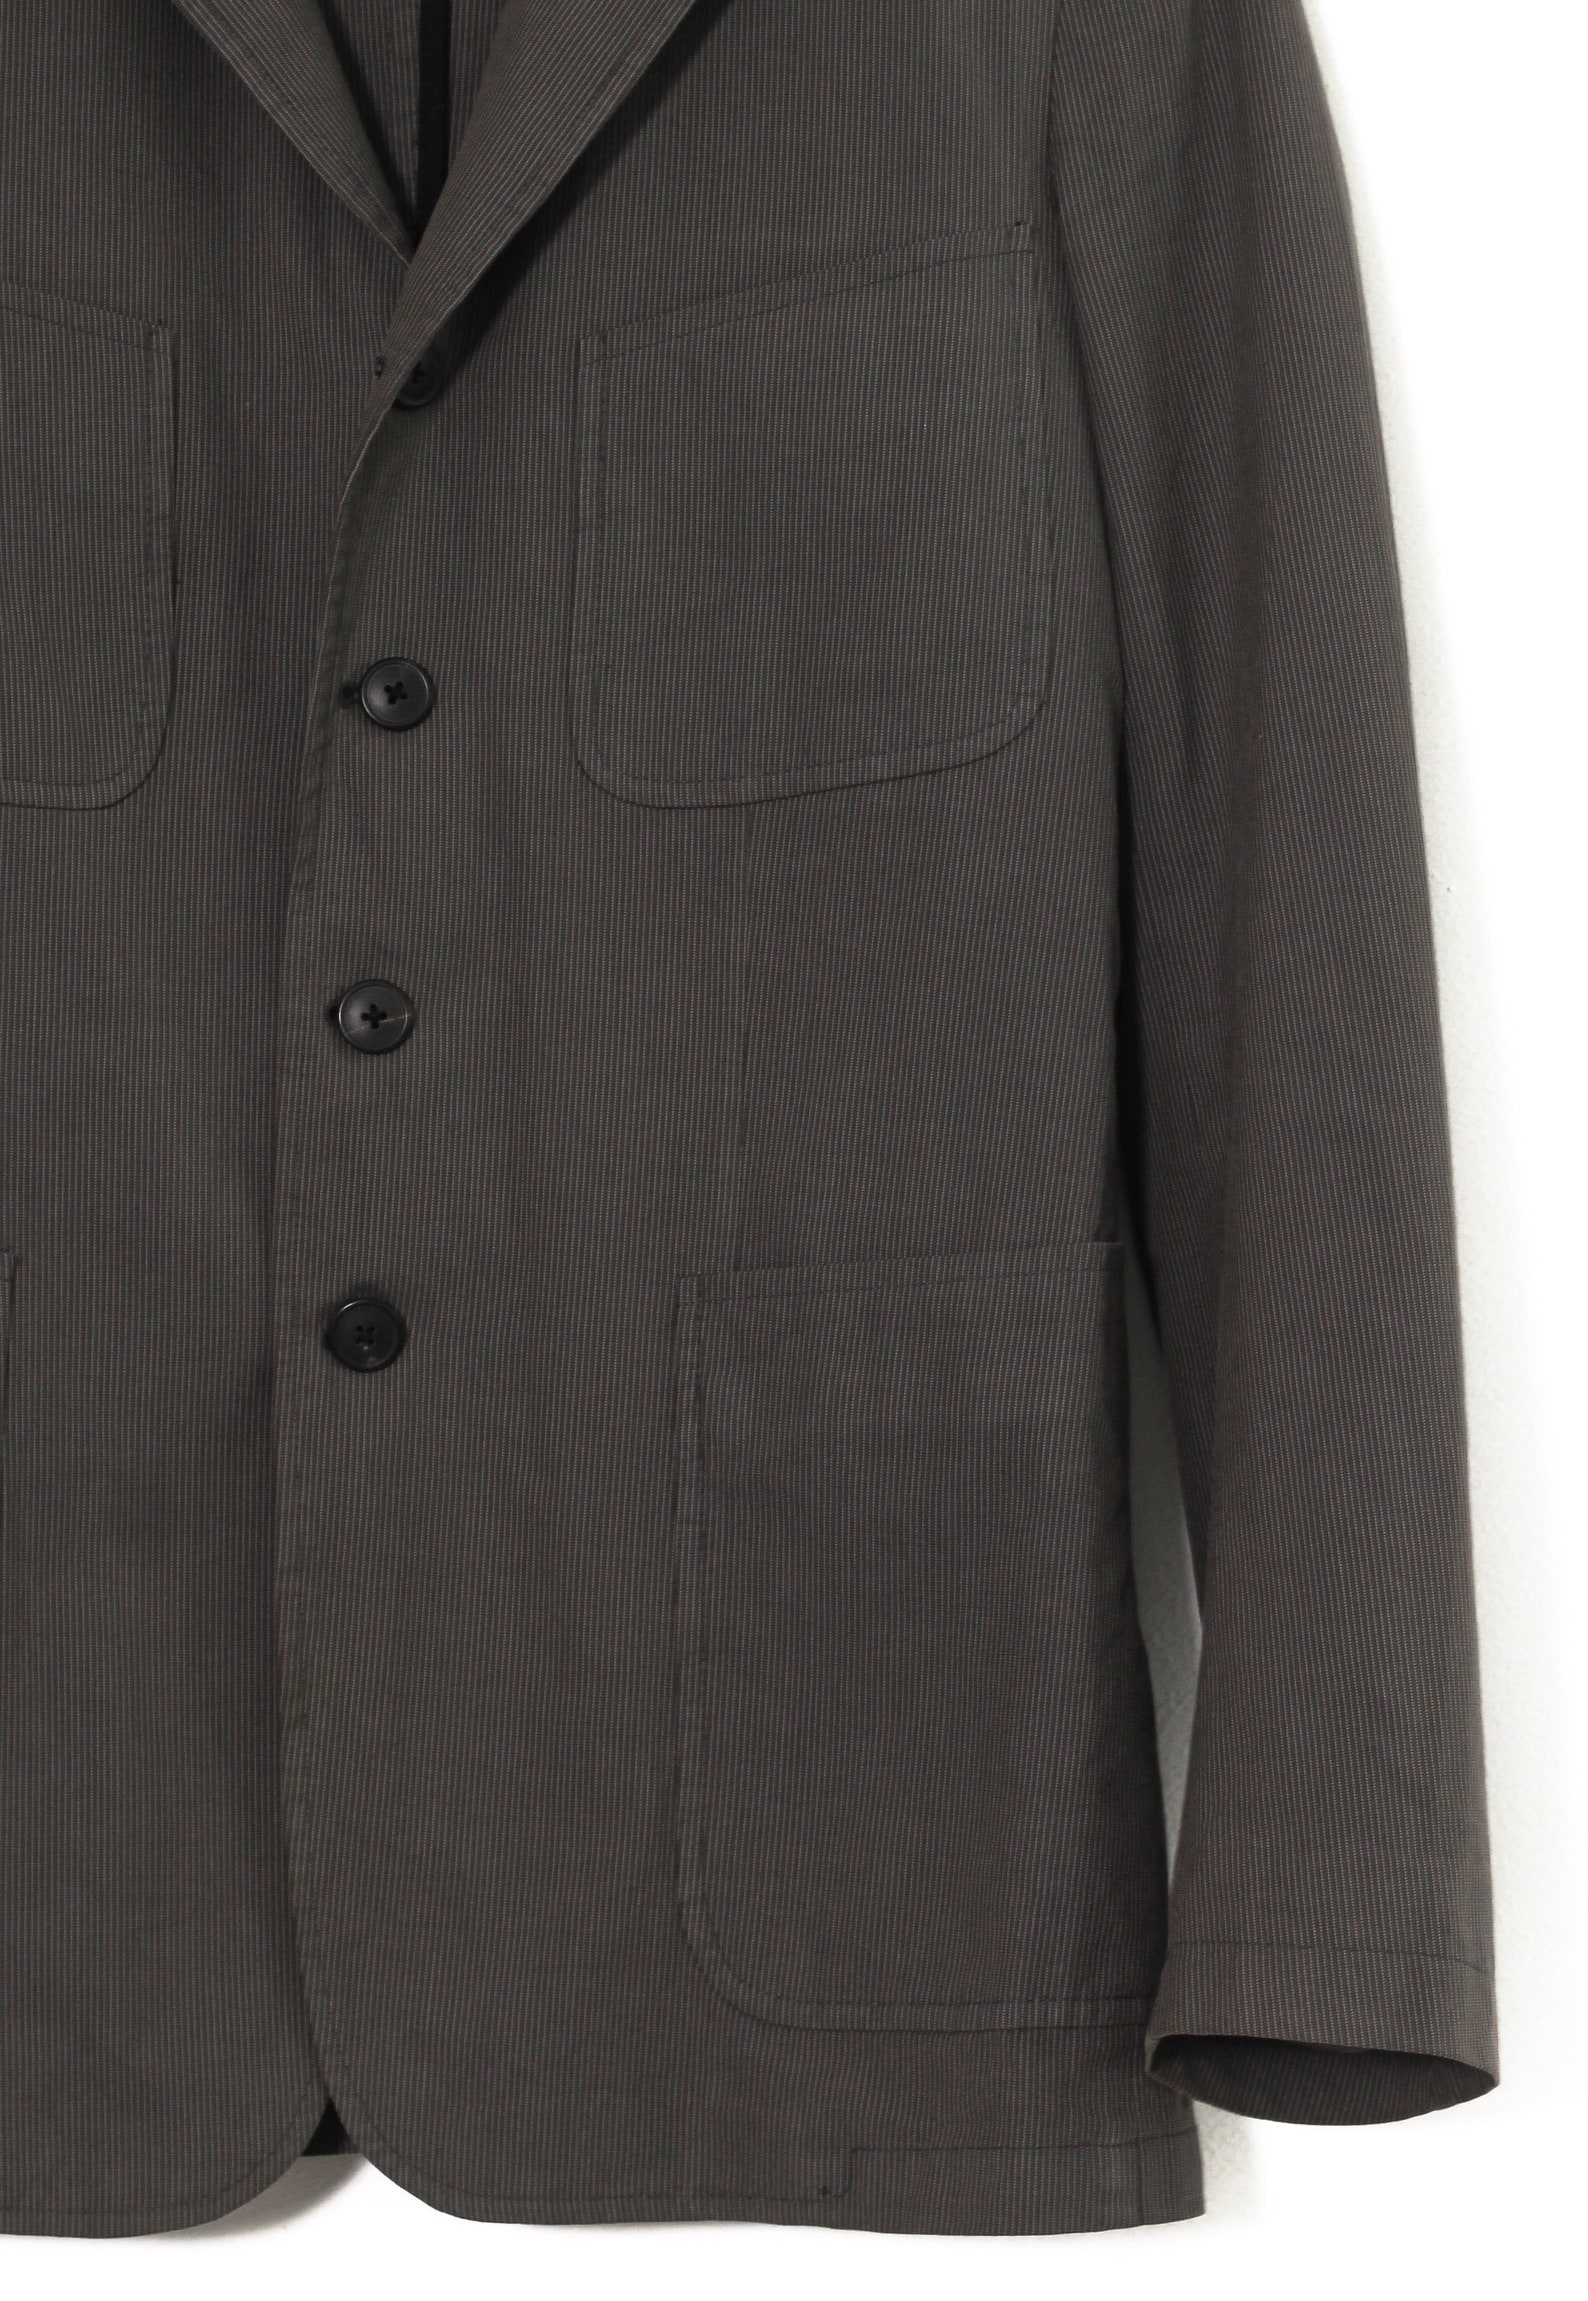 Mens DRIES VAN NOTEN Blazer Coat Jacket Cotton Striped Grey | Etsy